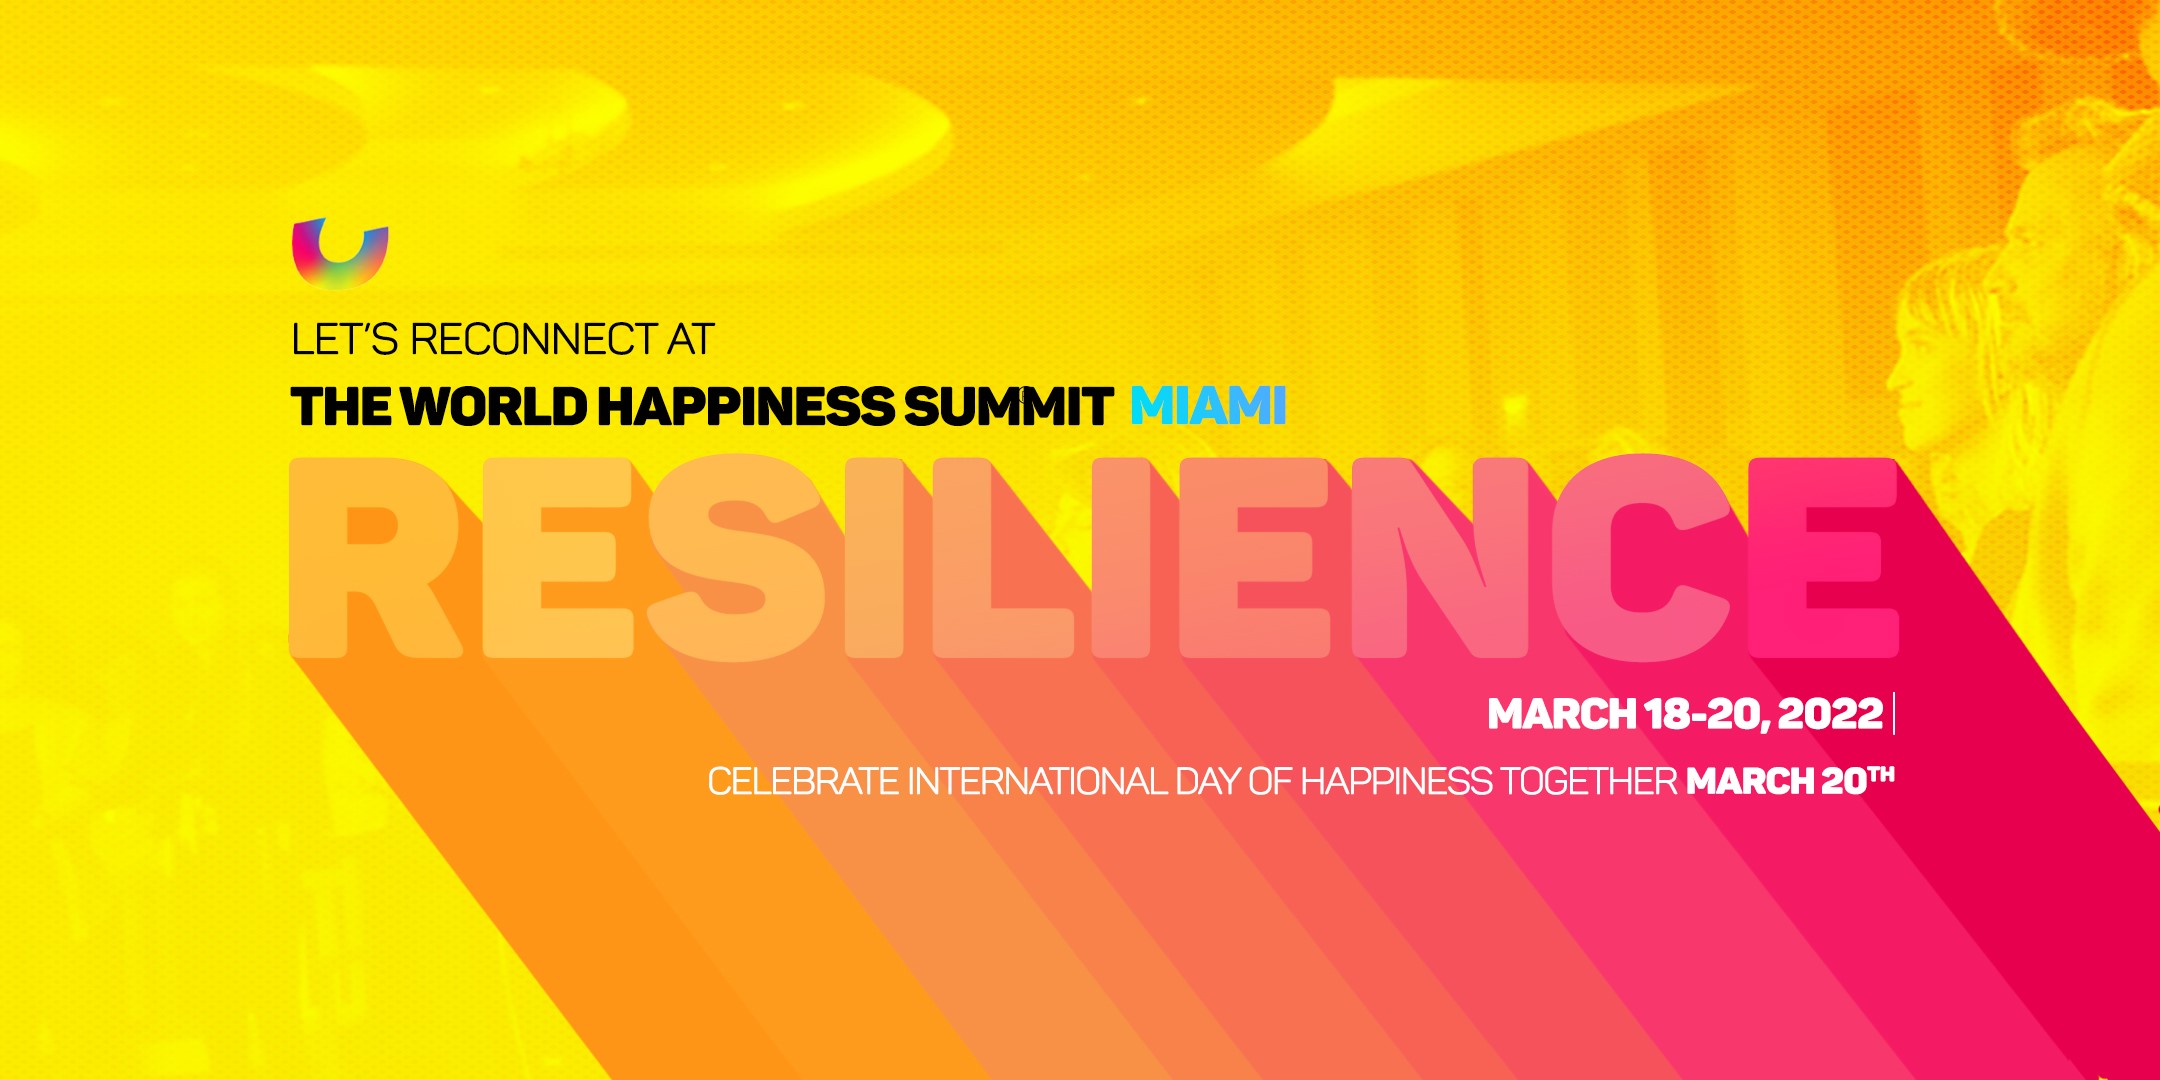 The World Happiness Summit Miami